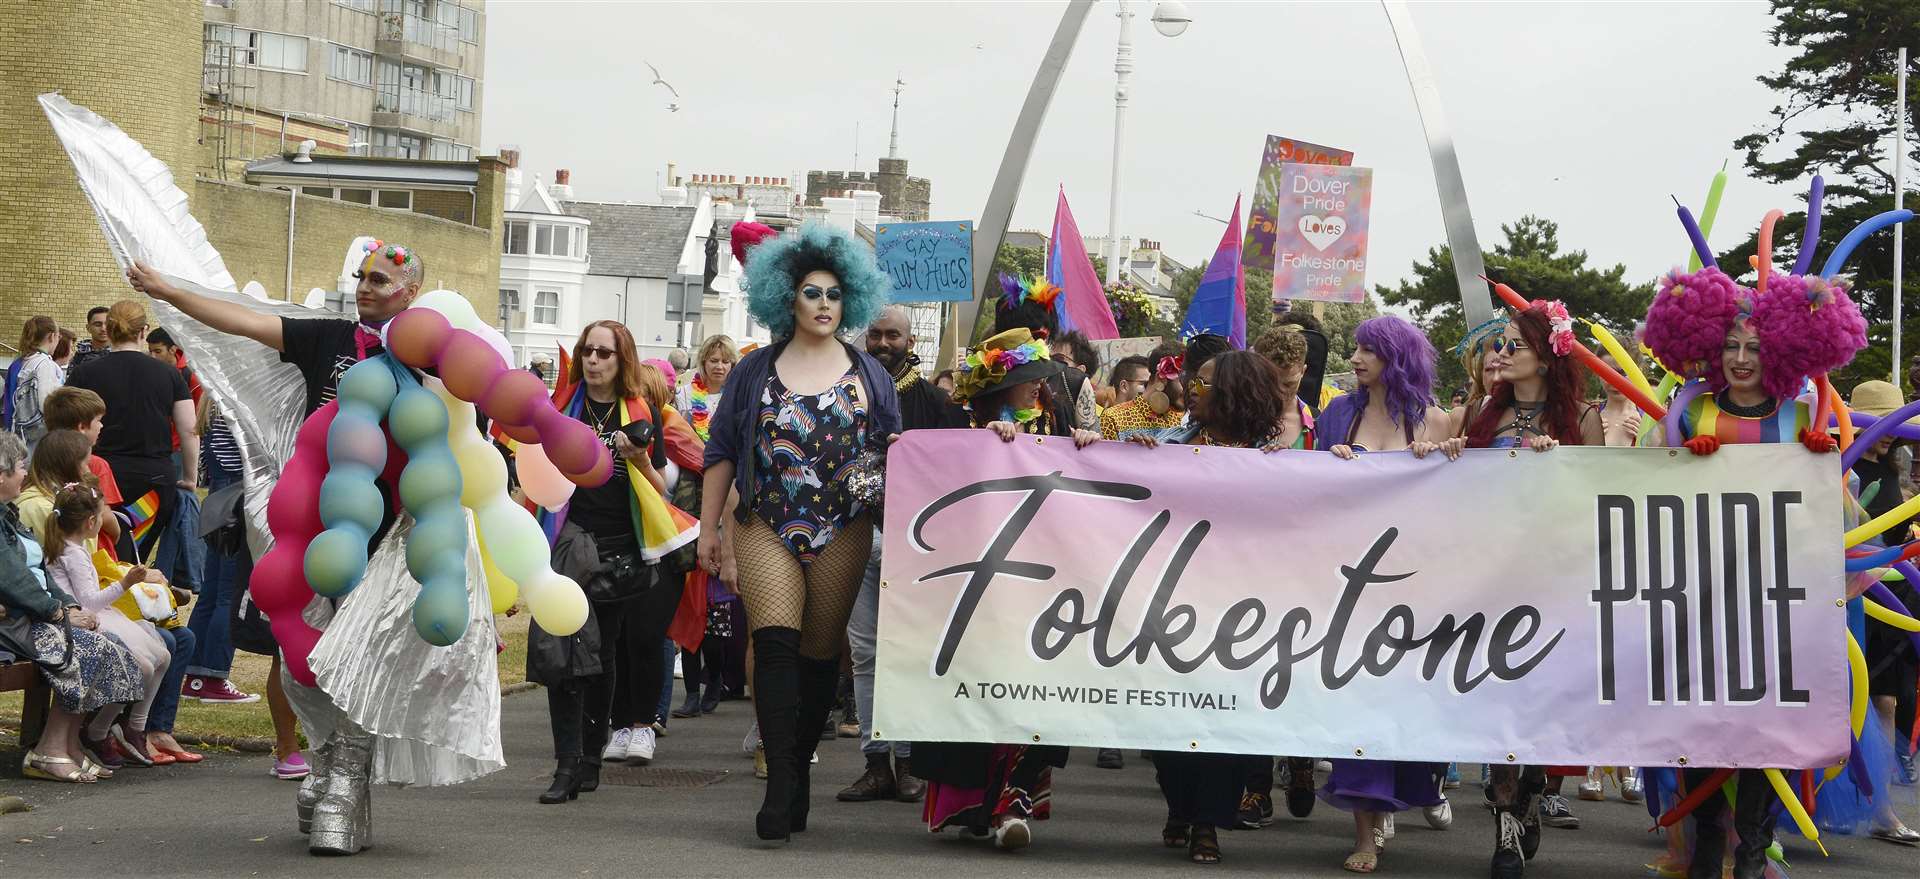 Folkestone Pride 2019. Picture: Paul Amos